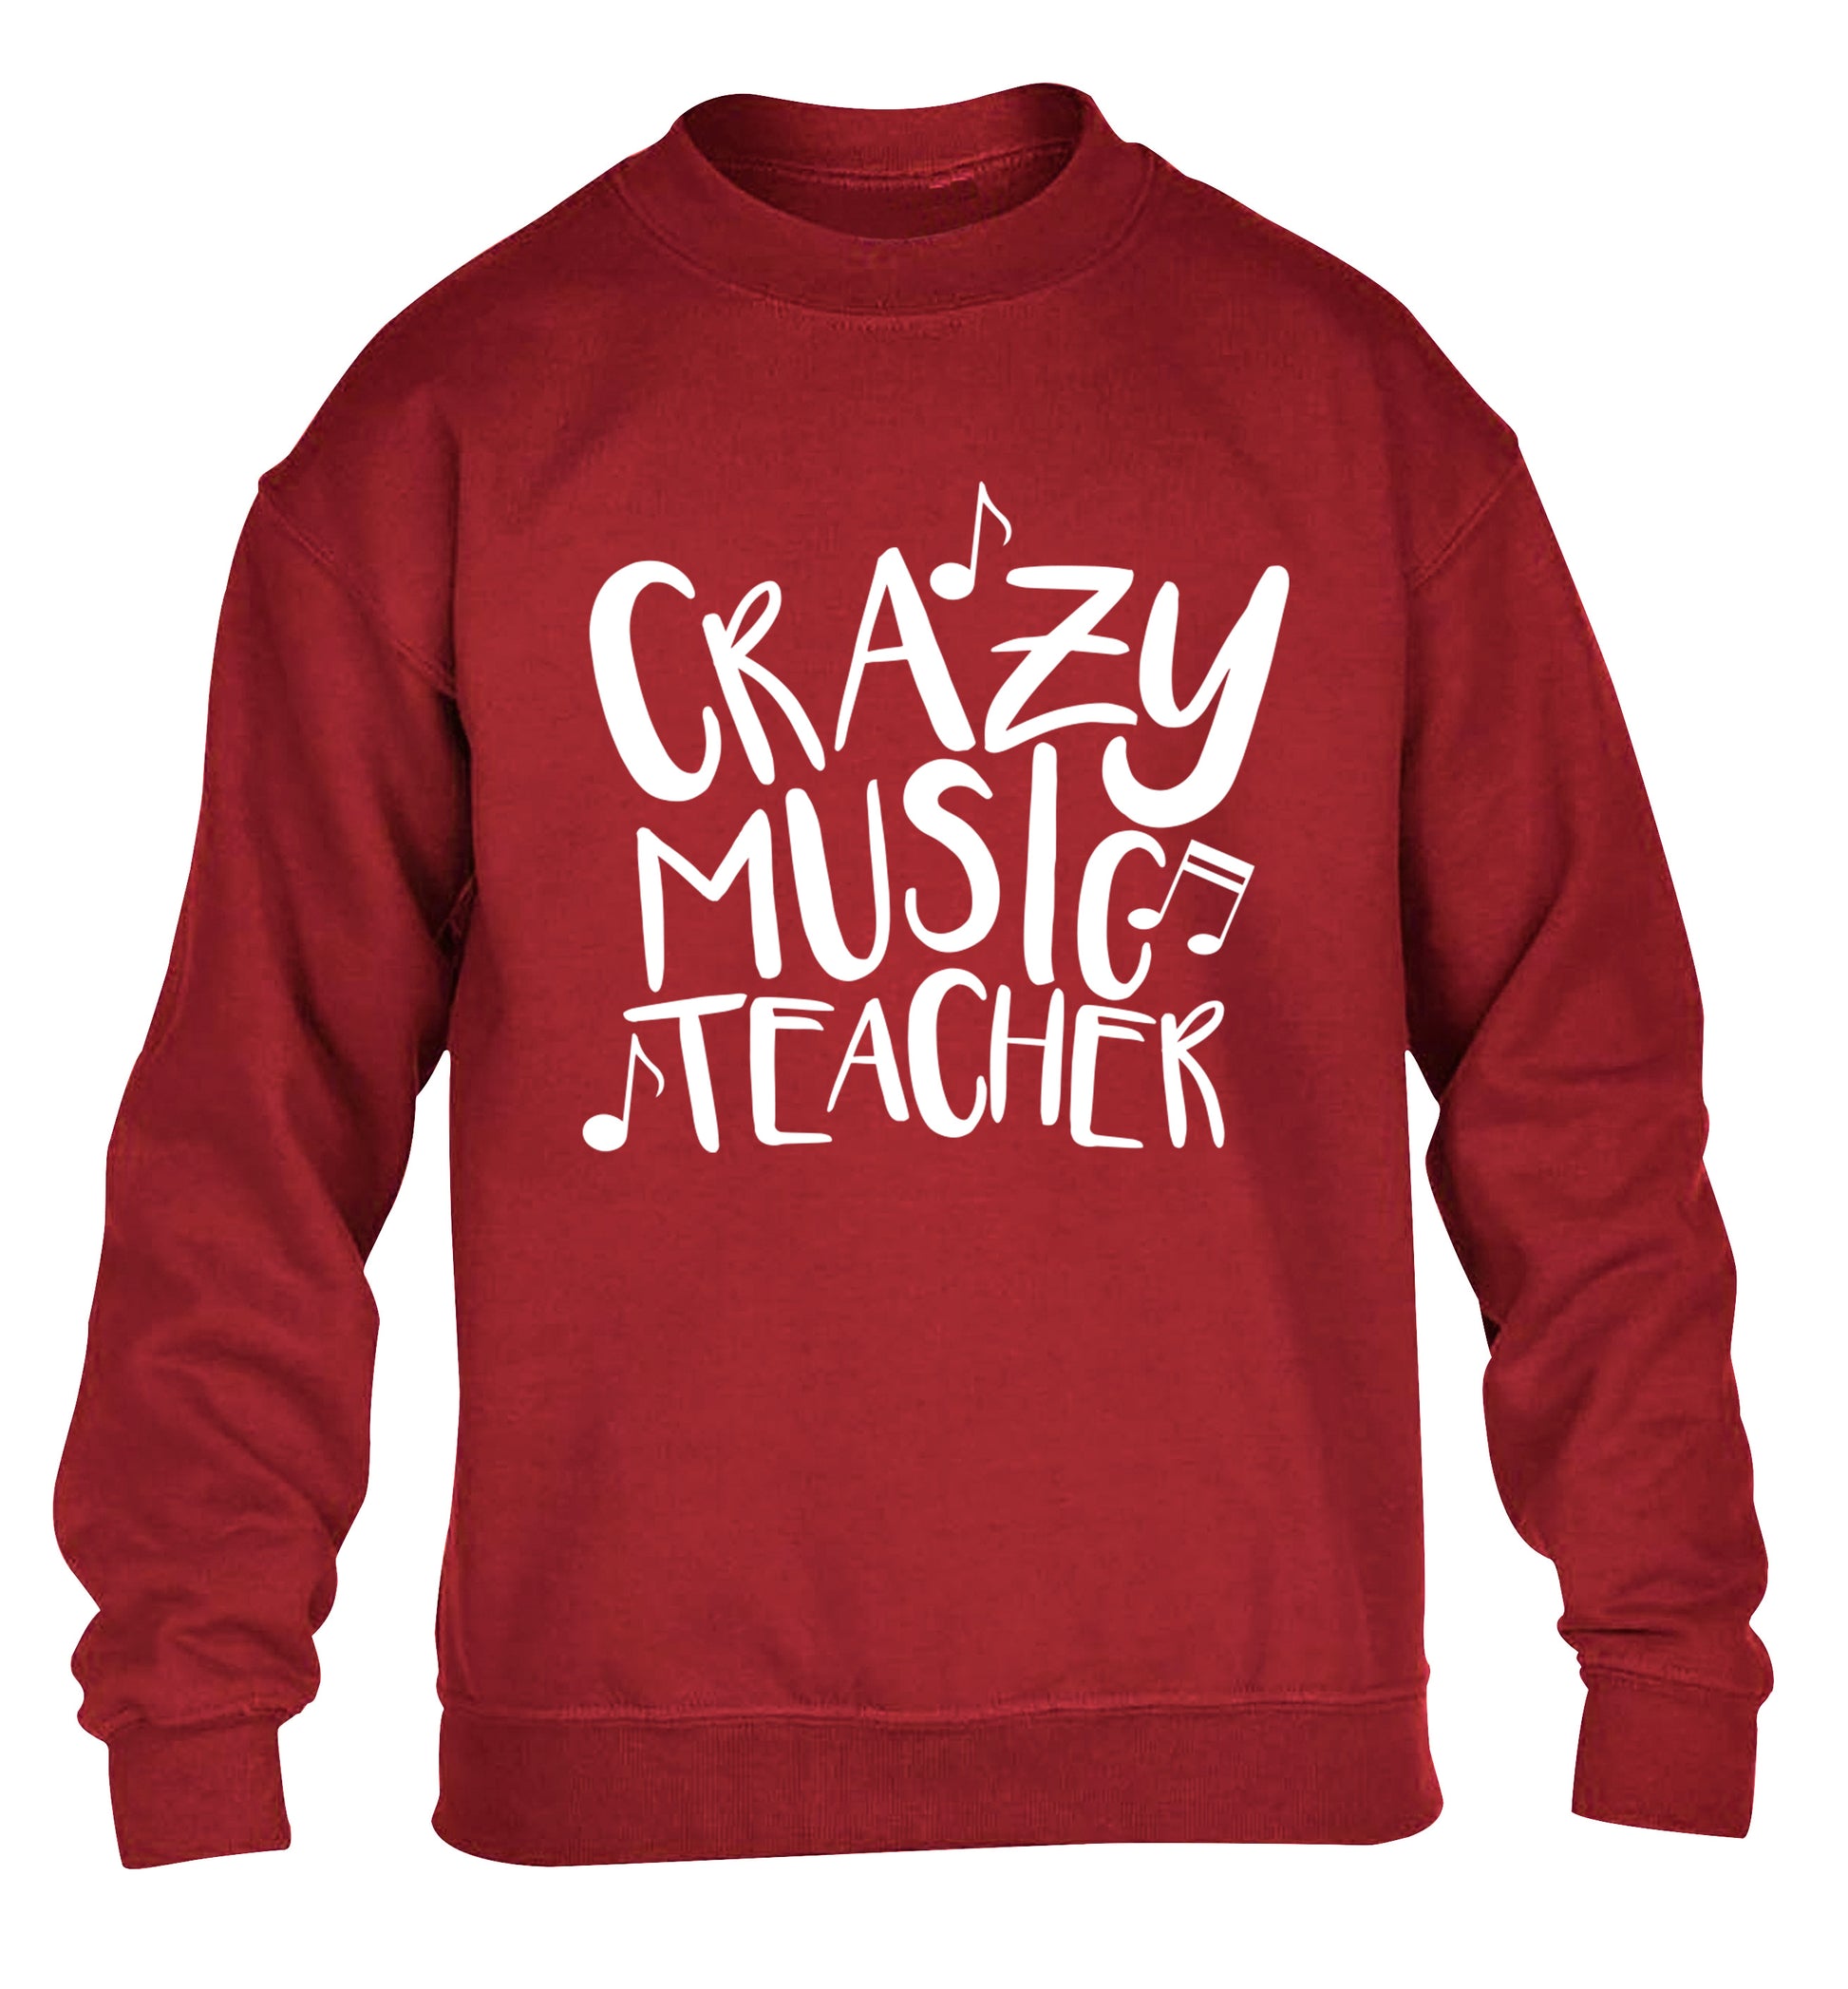 Crazy music teacher children's grey sweater 12-13 Years